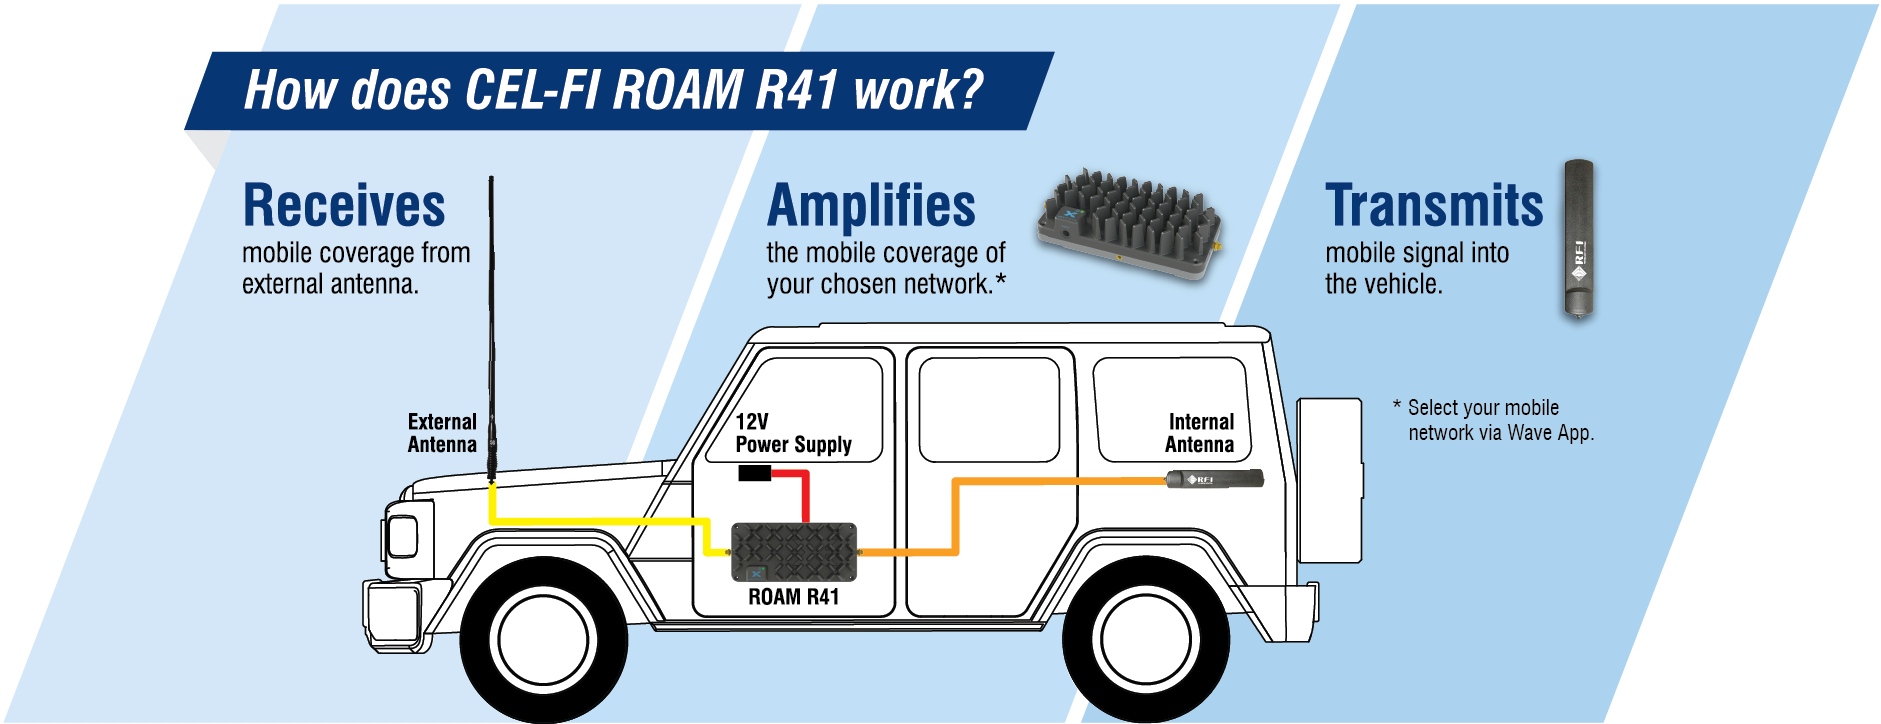 How CEL-FI ROAM R41 works?